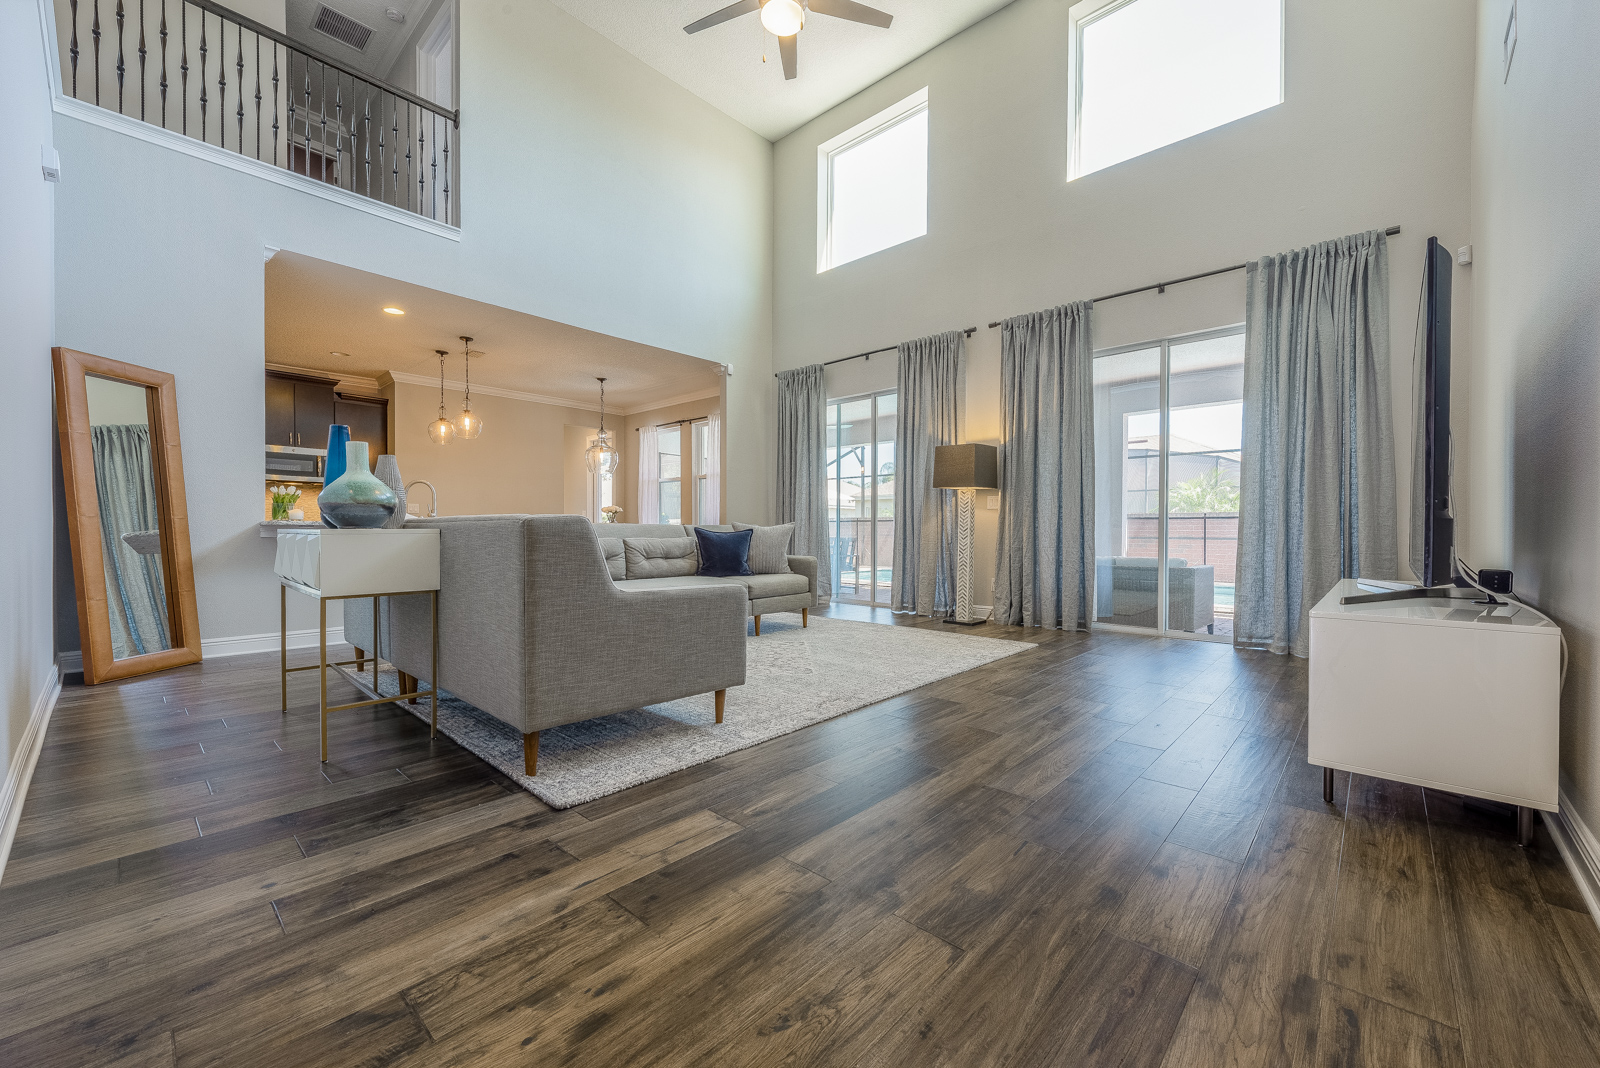 15 Trendy Hardwood Floors In 2020 Among Wood Flooring Companies